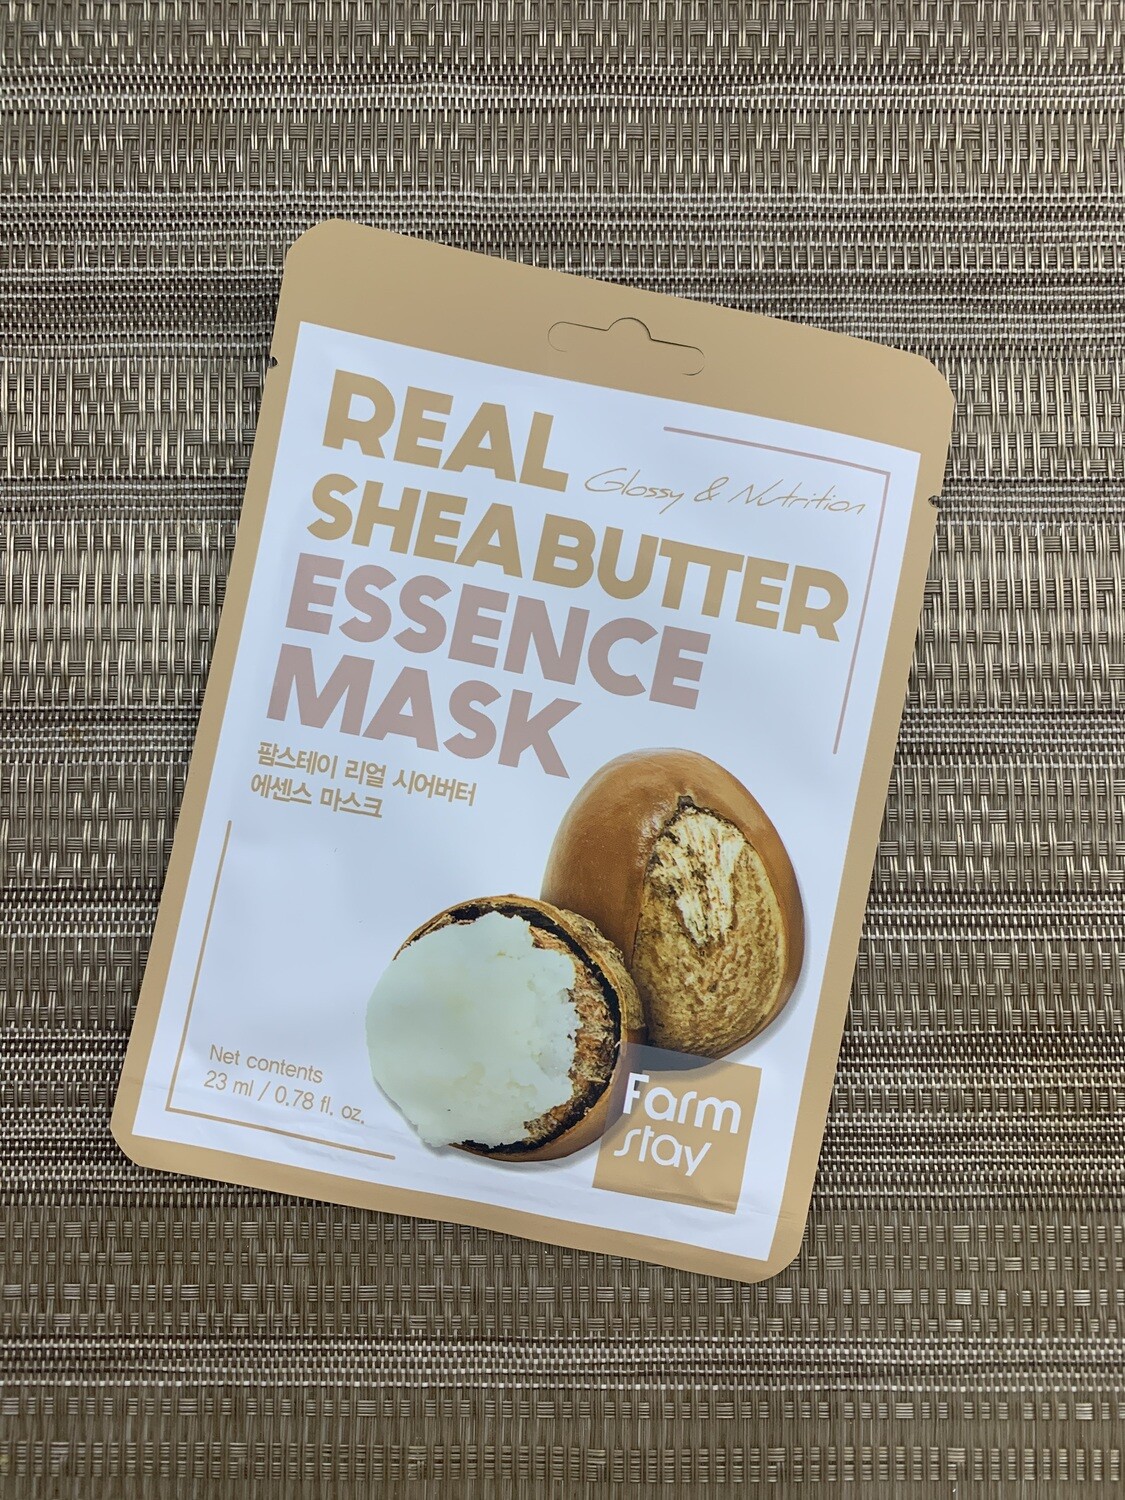 Тканевая маска с маслом ши farm stay real sheabutter essence mask